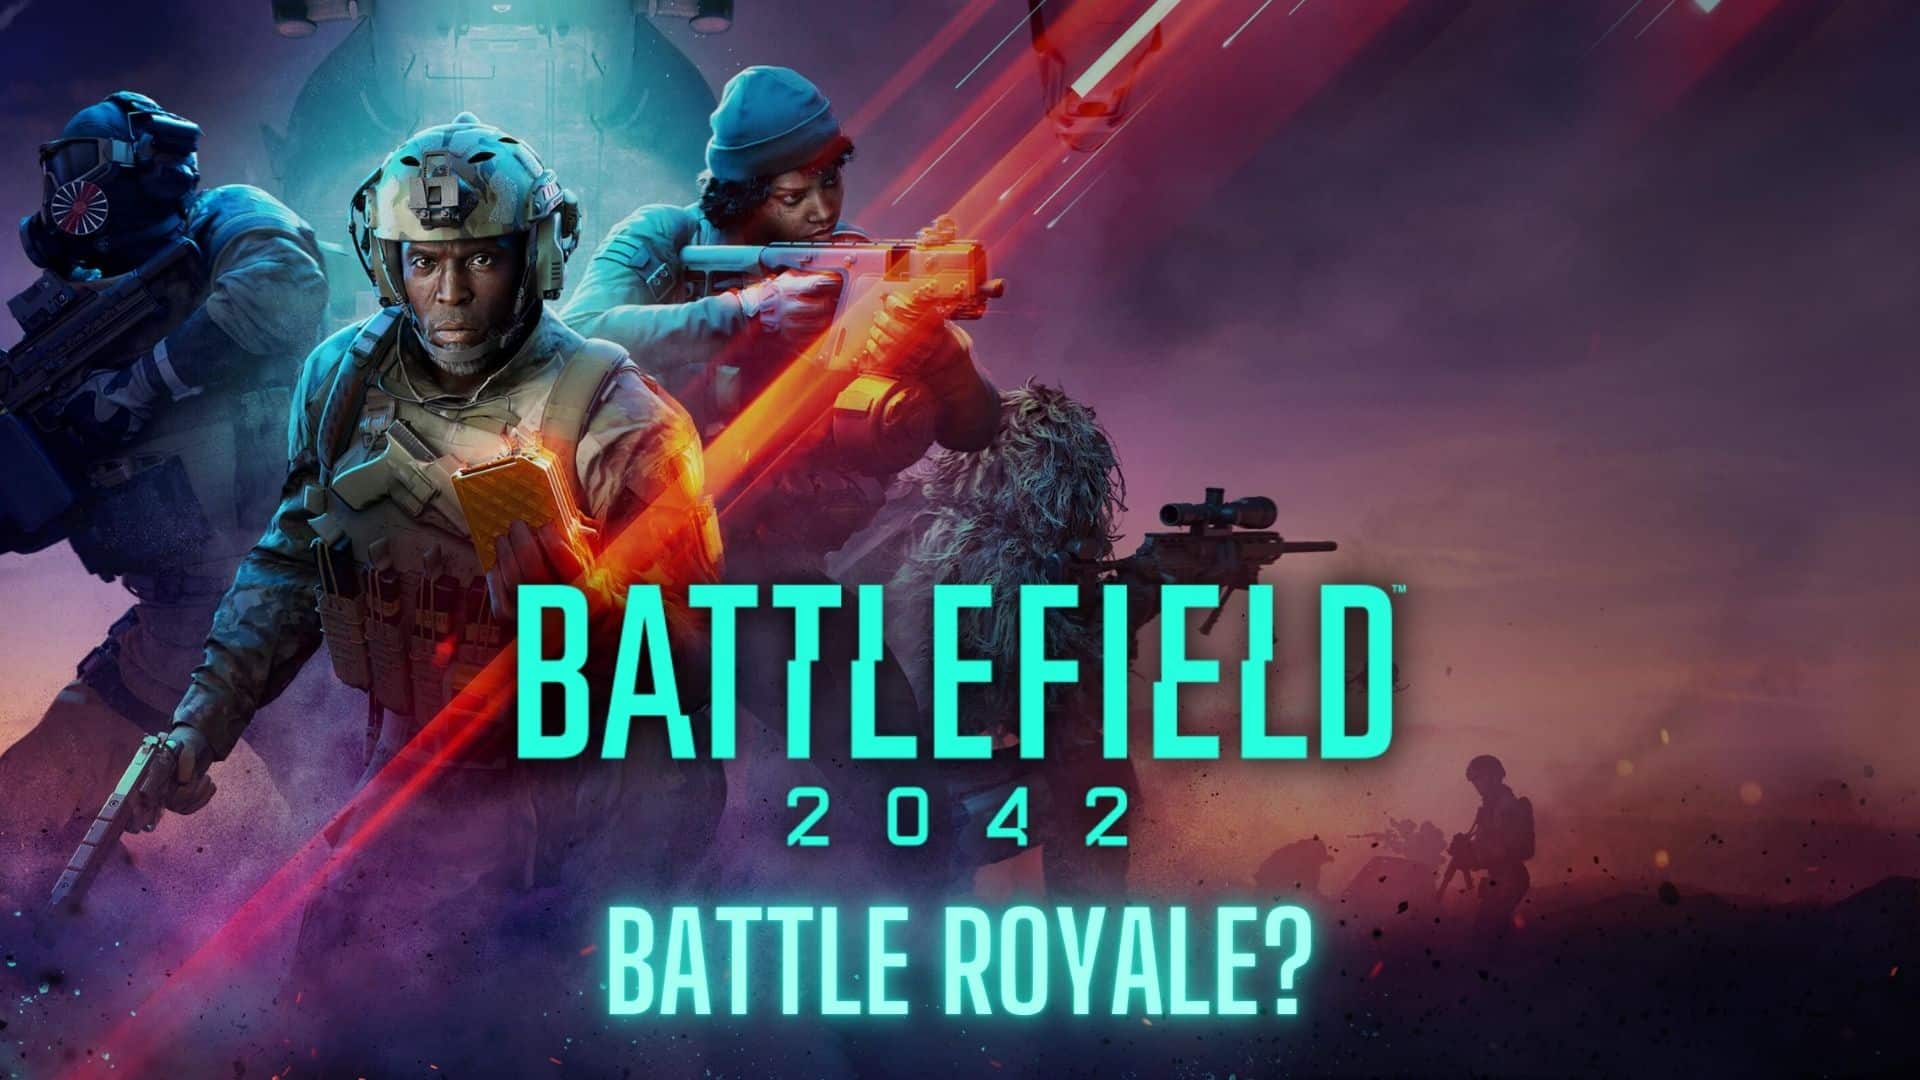 Battlefield 2042 started as battle royale game, Apex Legends inspired